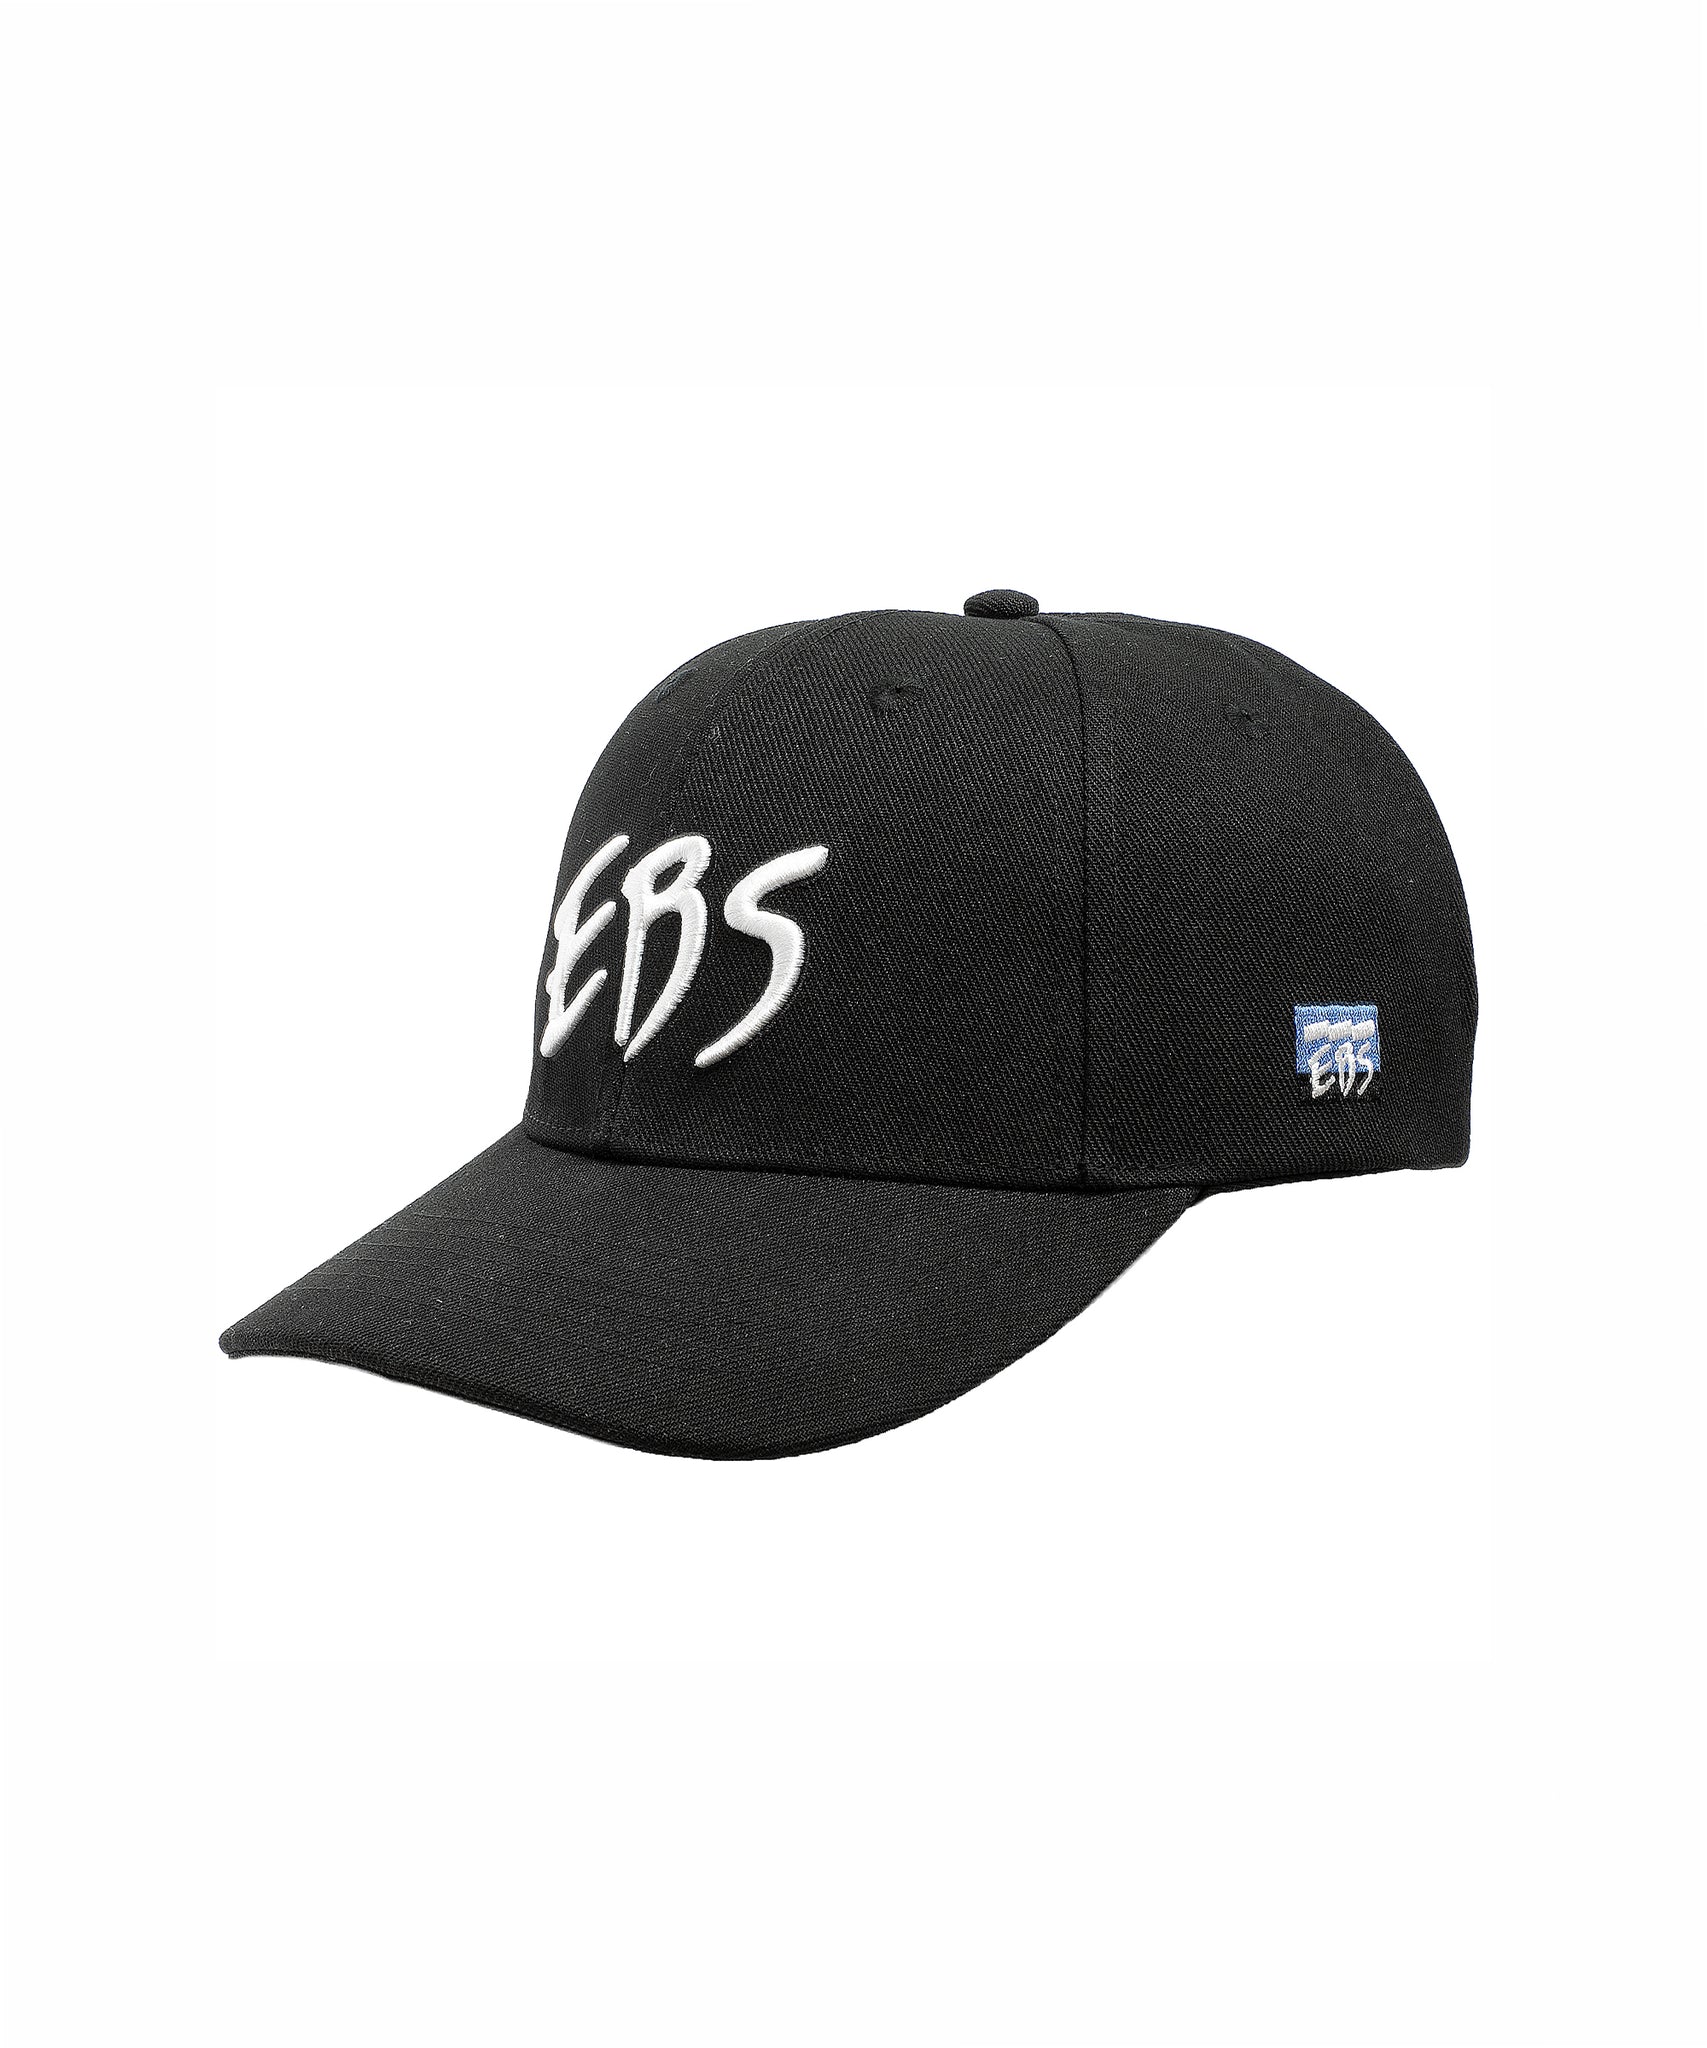 EBS Baseball Style Cap